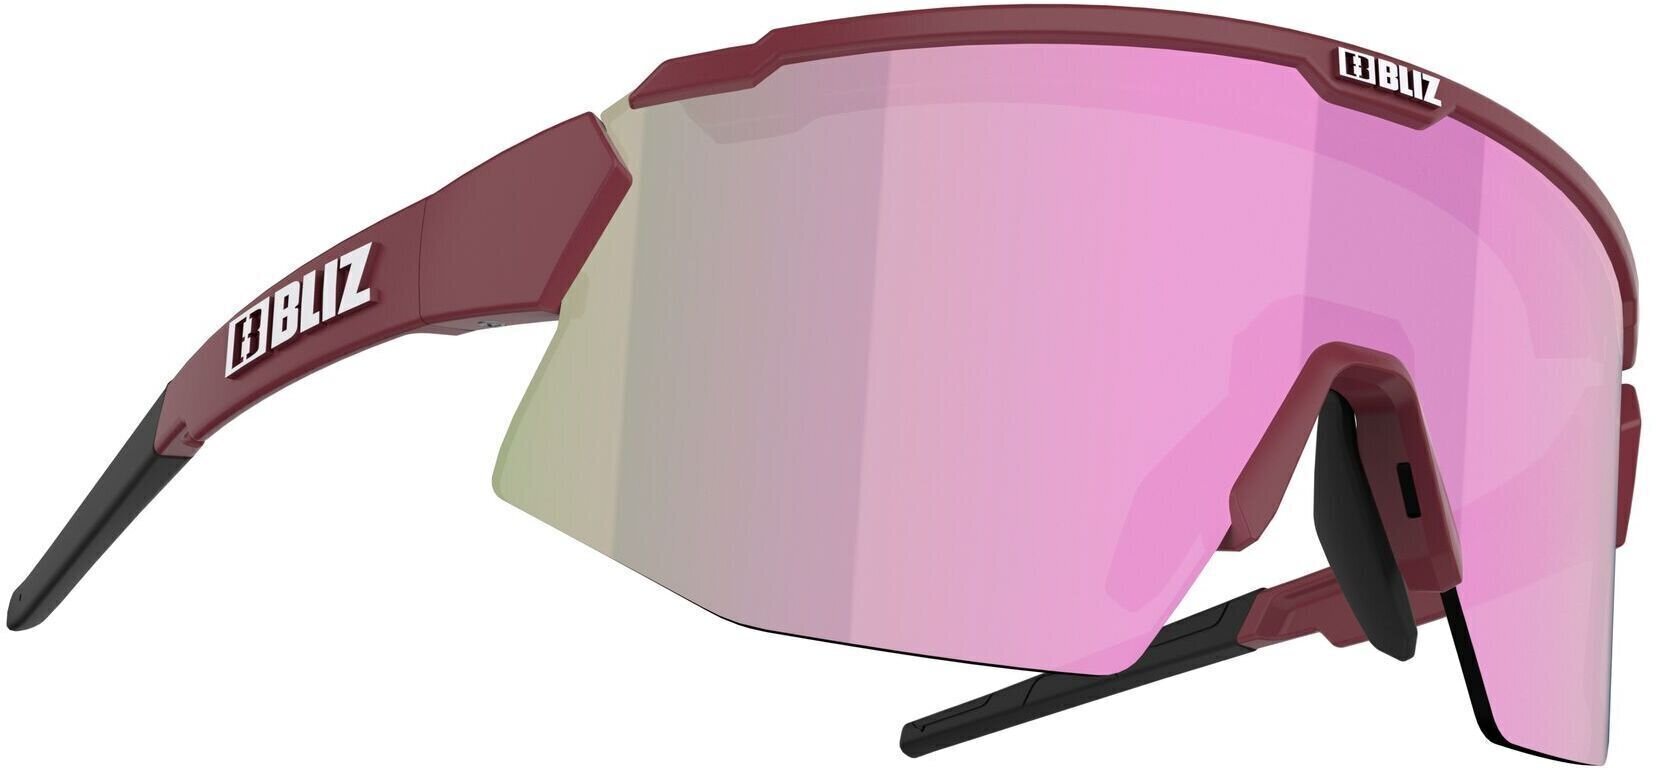 Cycling Glasses Bliz Breeze Small 52212-44 Matt Burgundy/Brown w Rose Multi plus Spare lens Pink Cycling Glasses